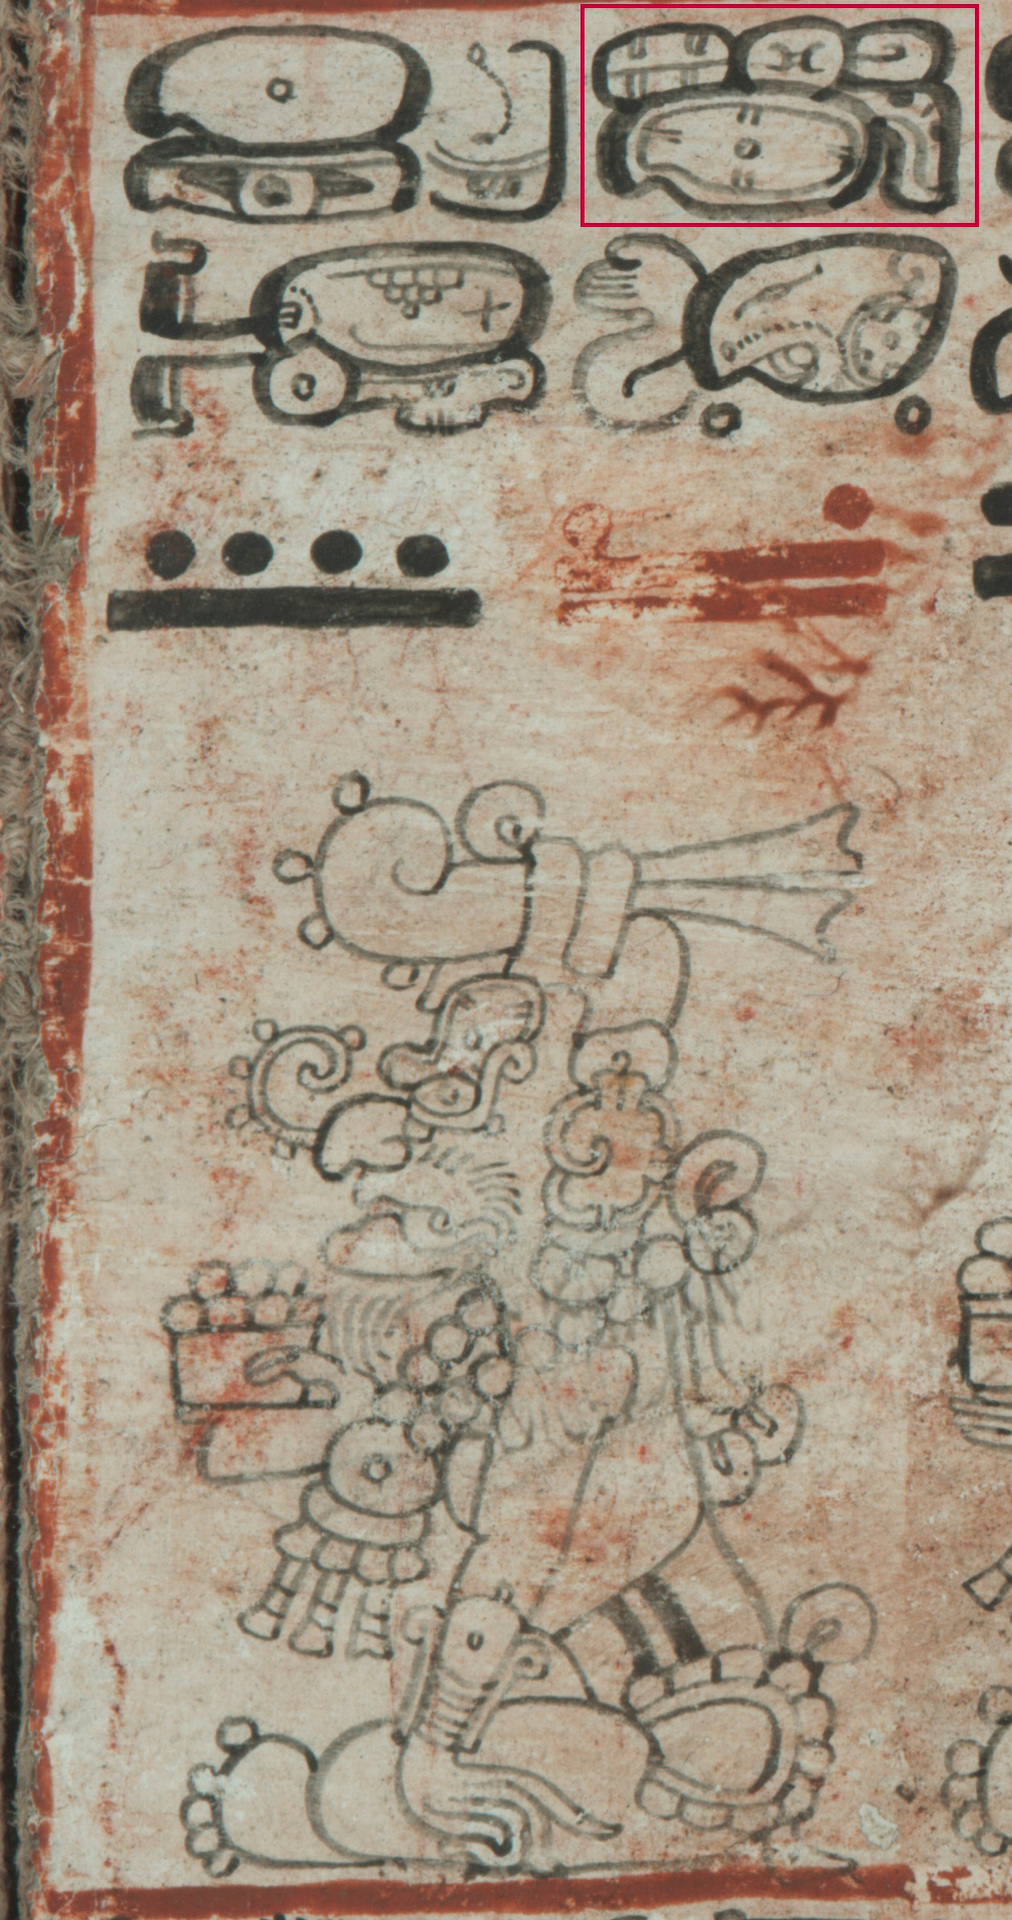 Codex Dresdensis: Sonnengott K’in Ajaw